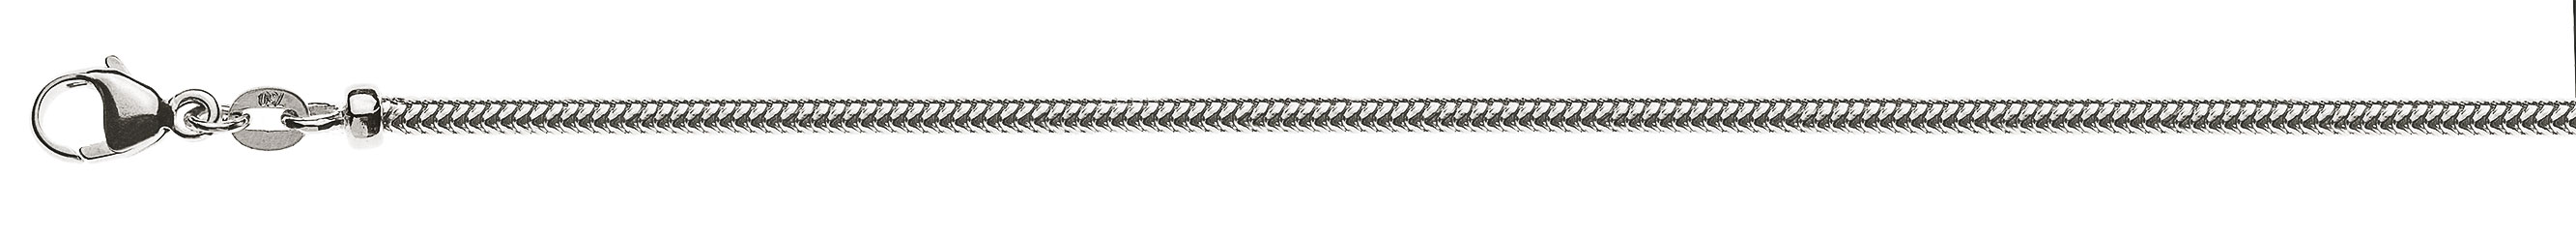 AURONOS Prestige Necklace white gold 18K snake chain 40cm 2.4mm